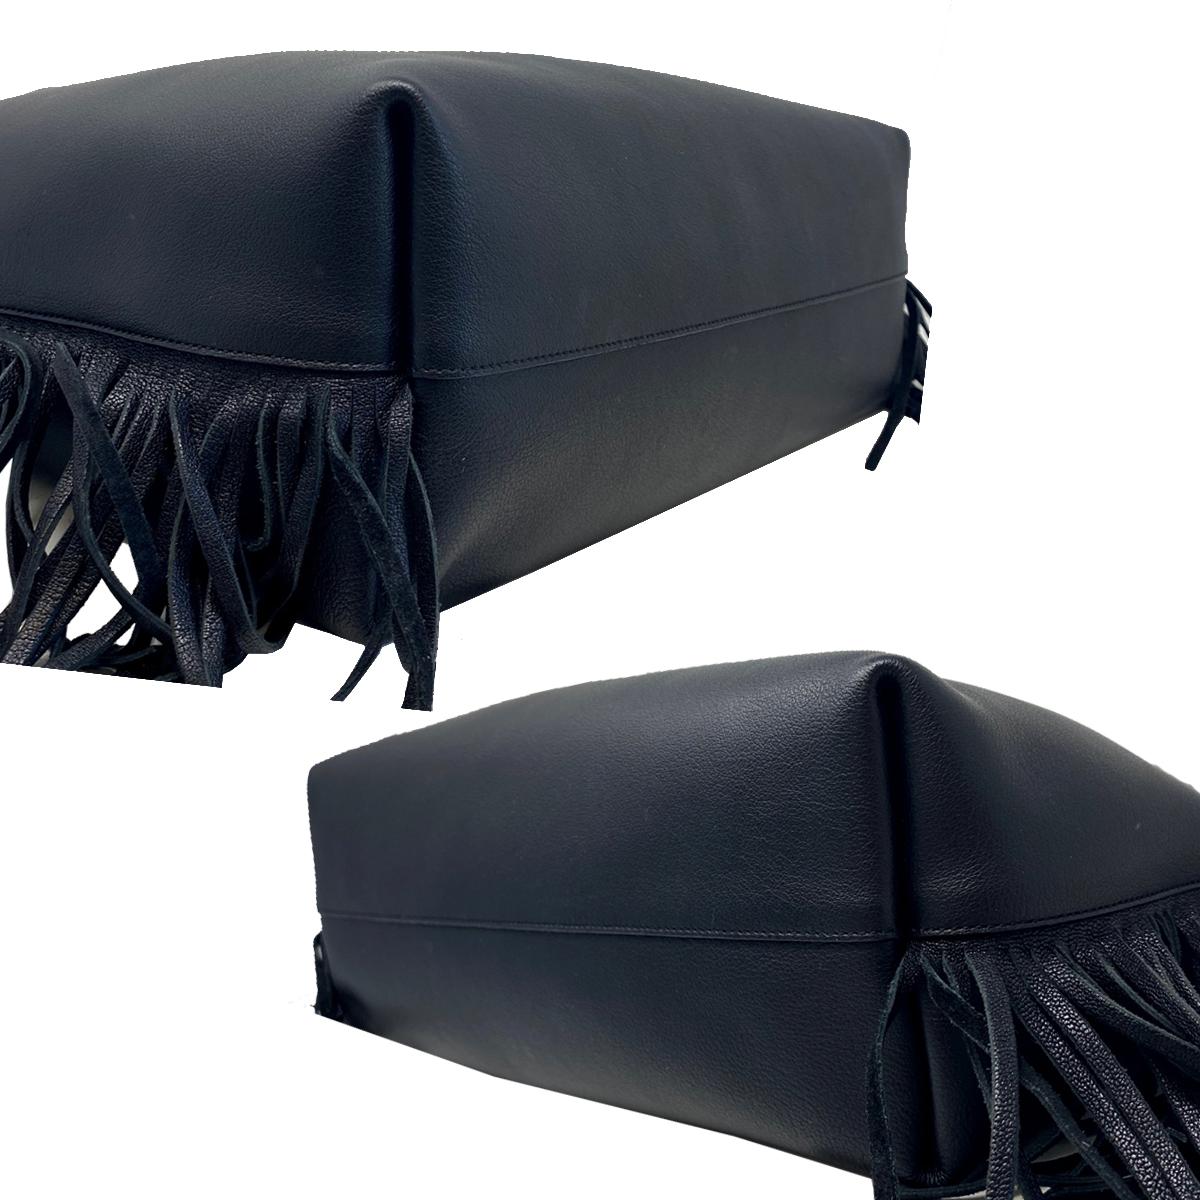 YSL Yves Saint Laurent Fringe Black Leather Tote Handbag In Good Condition For Sale In Boca Raton, FL